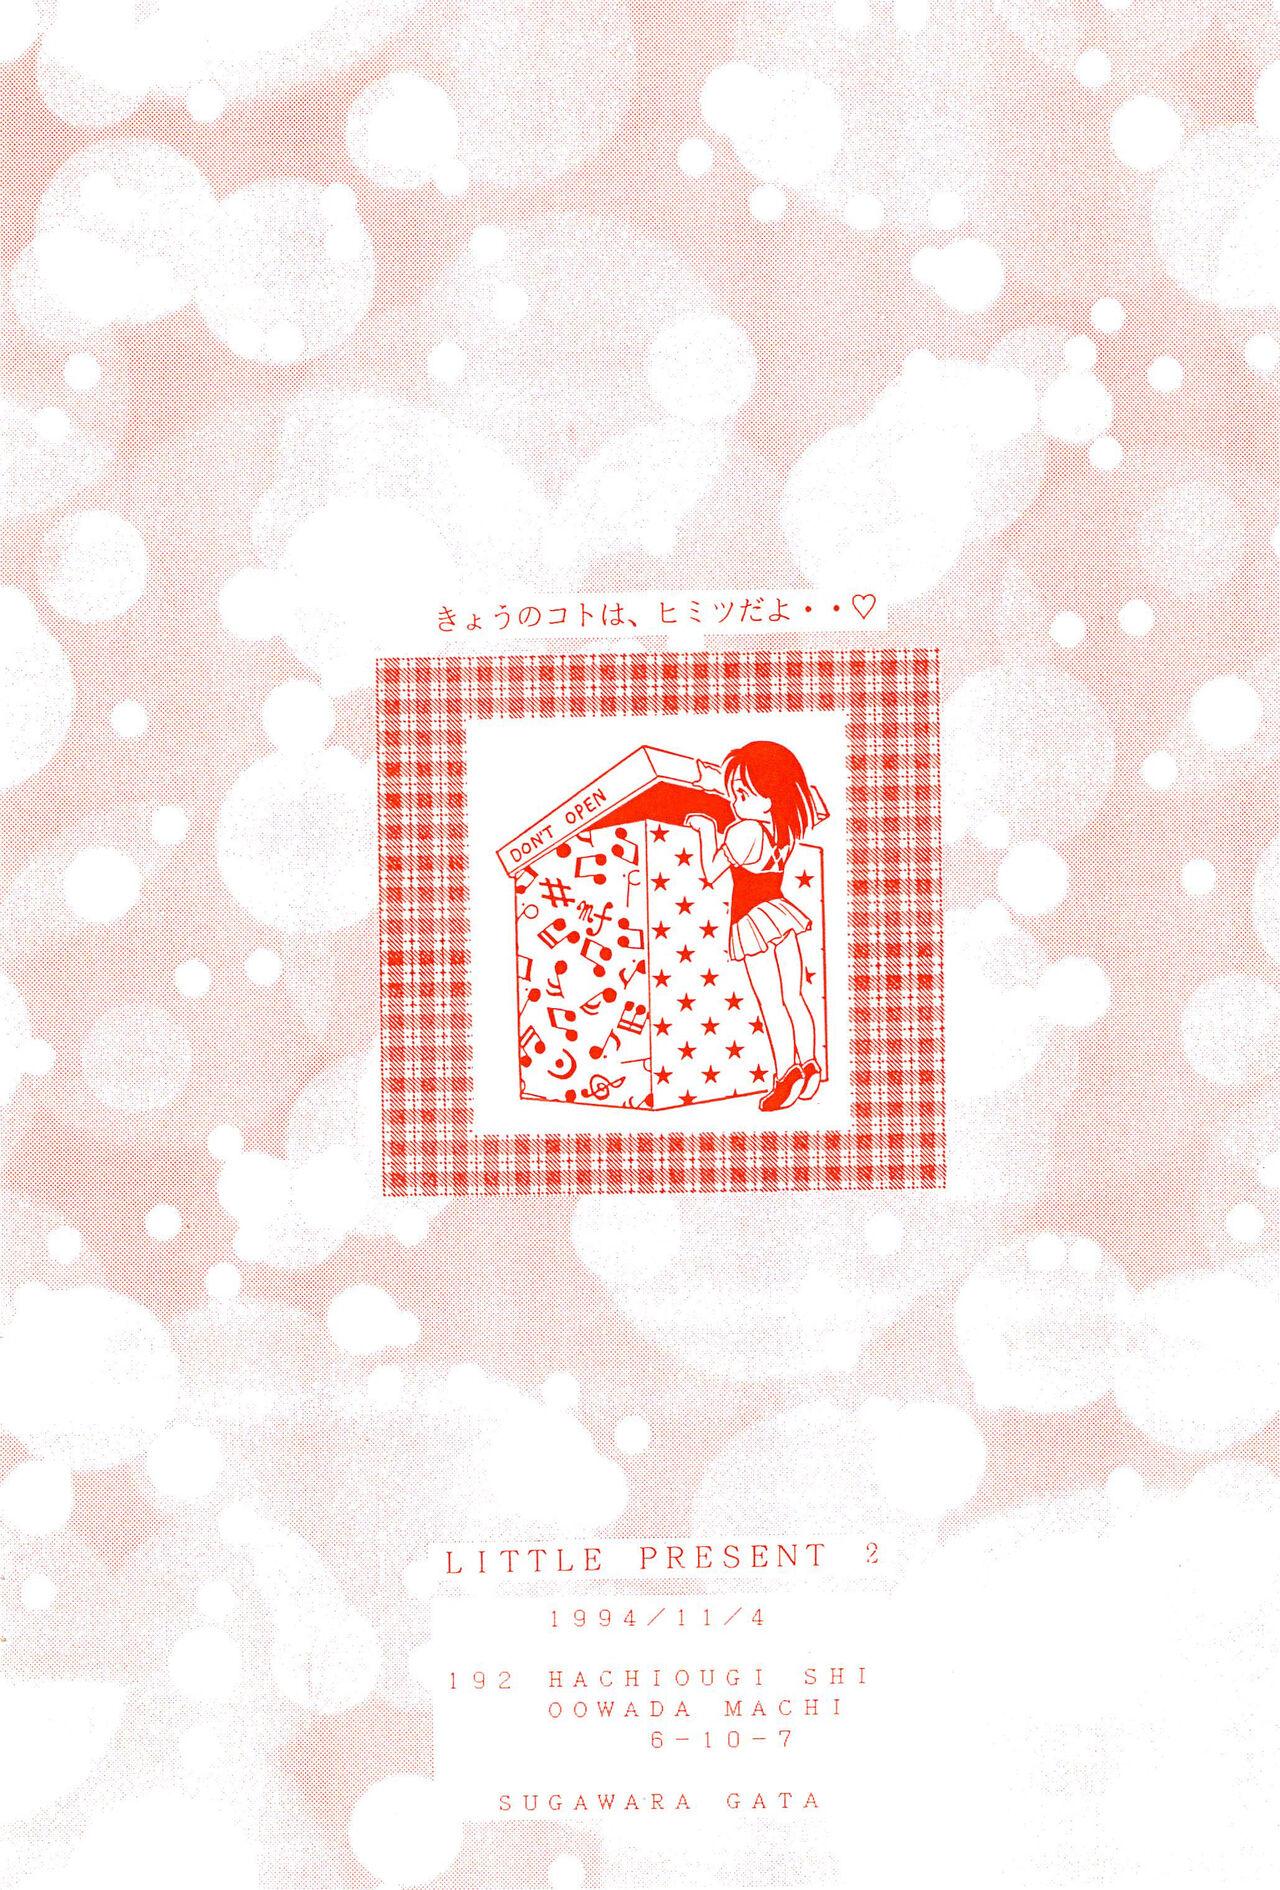 Little Present 2 - My Sweet Angel 12